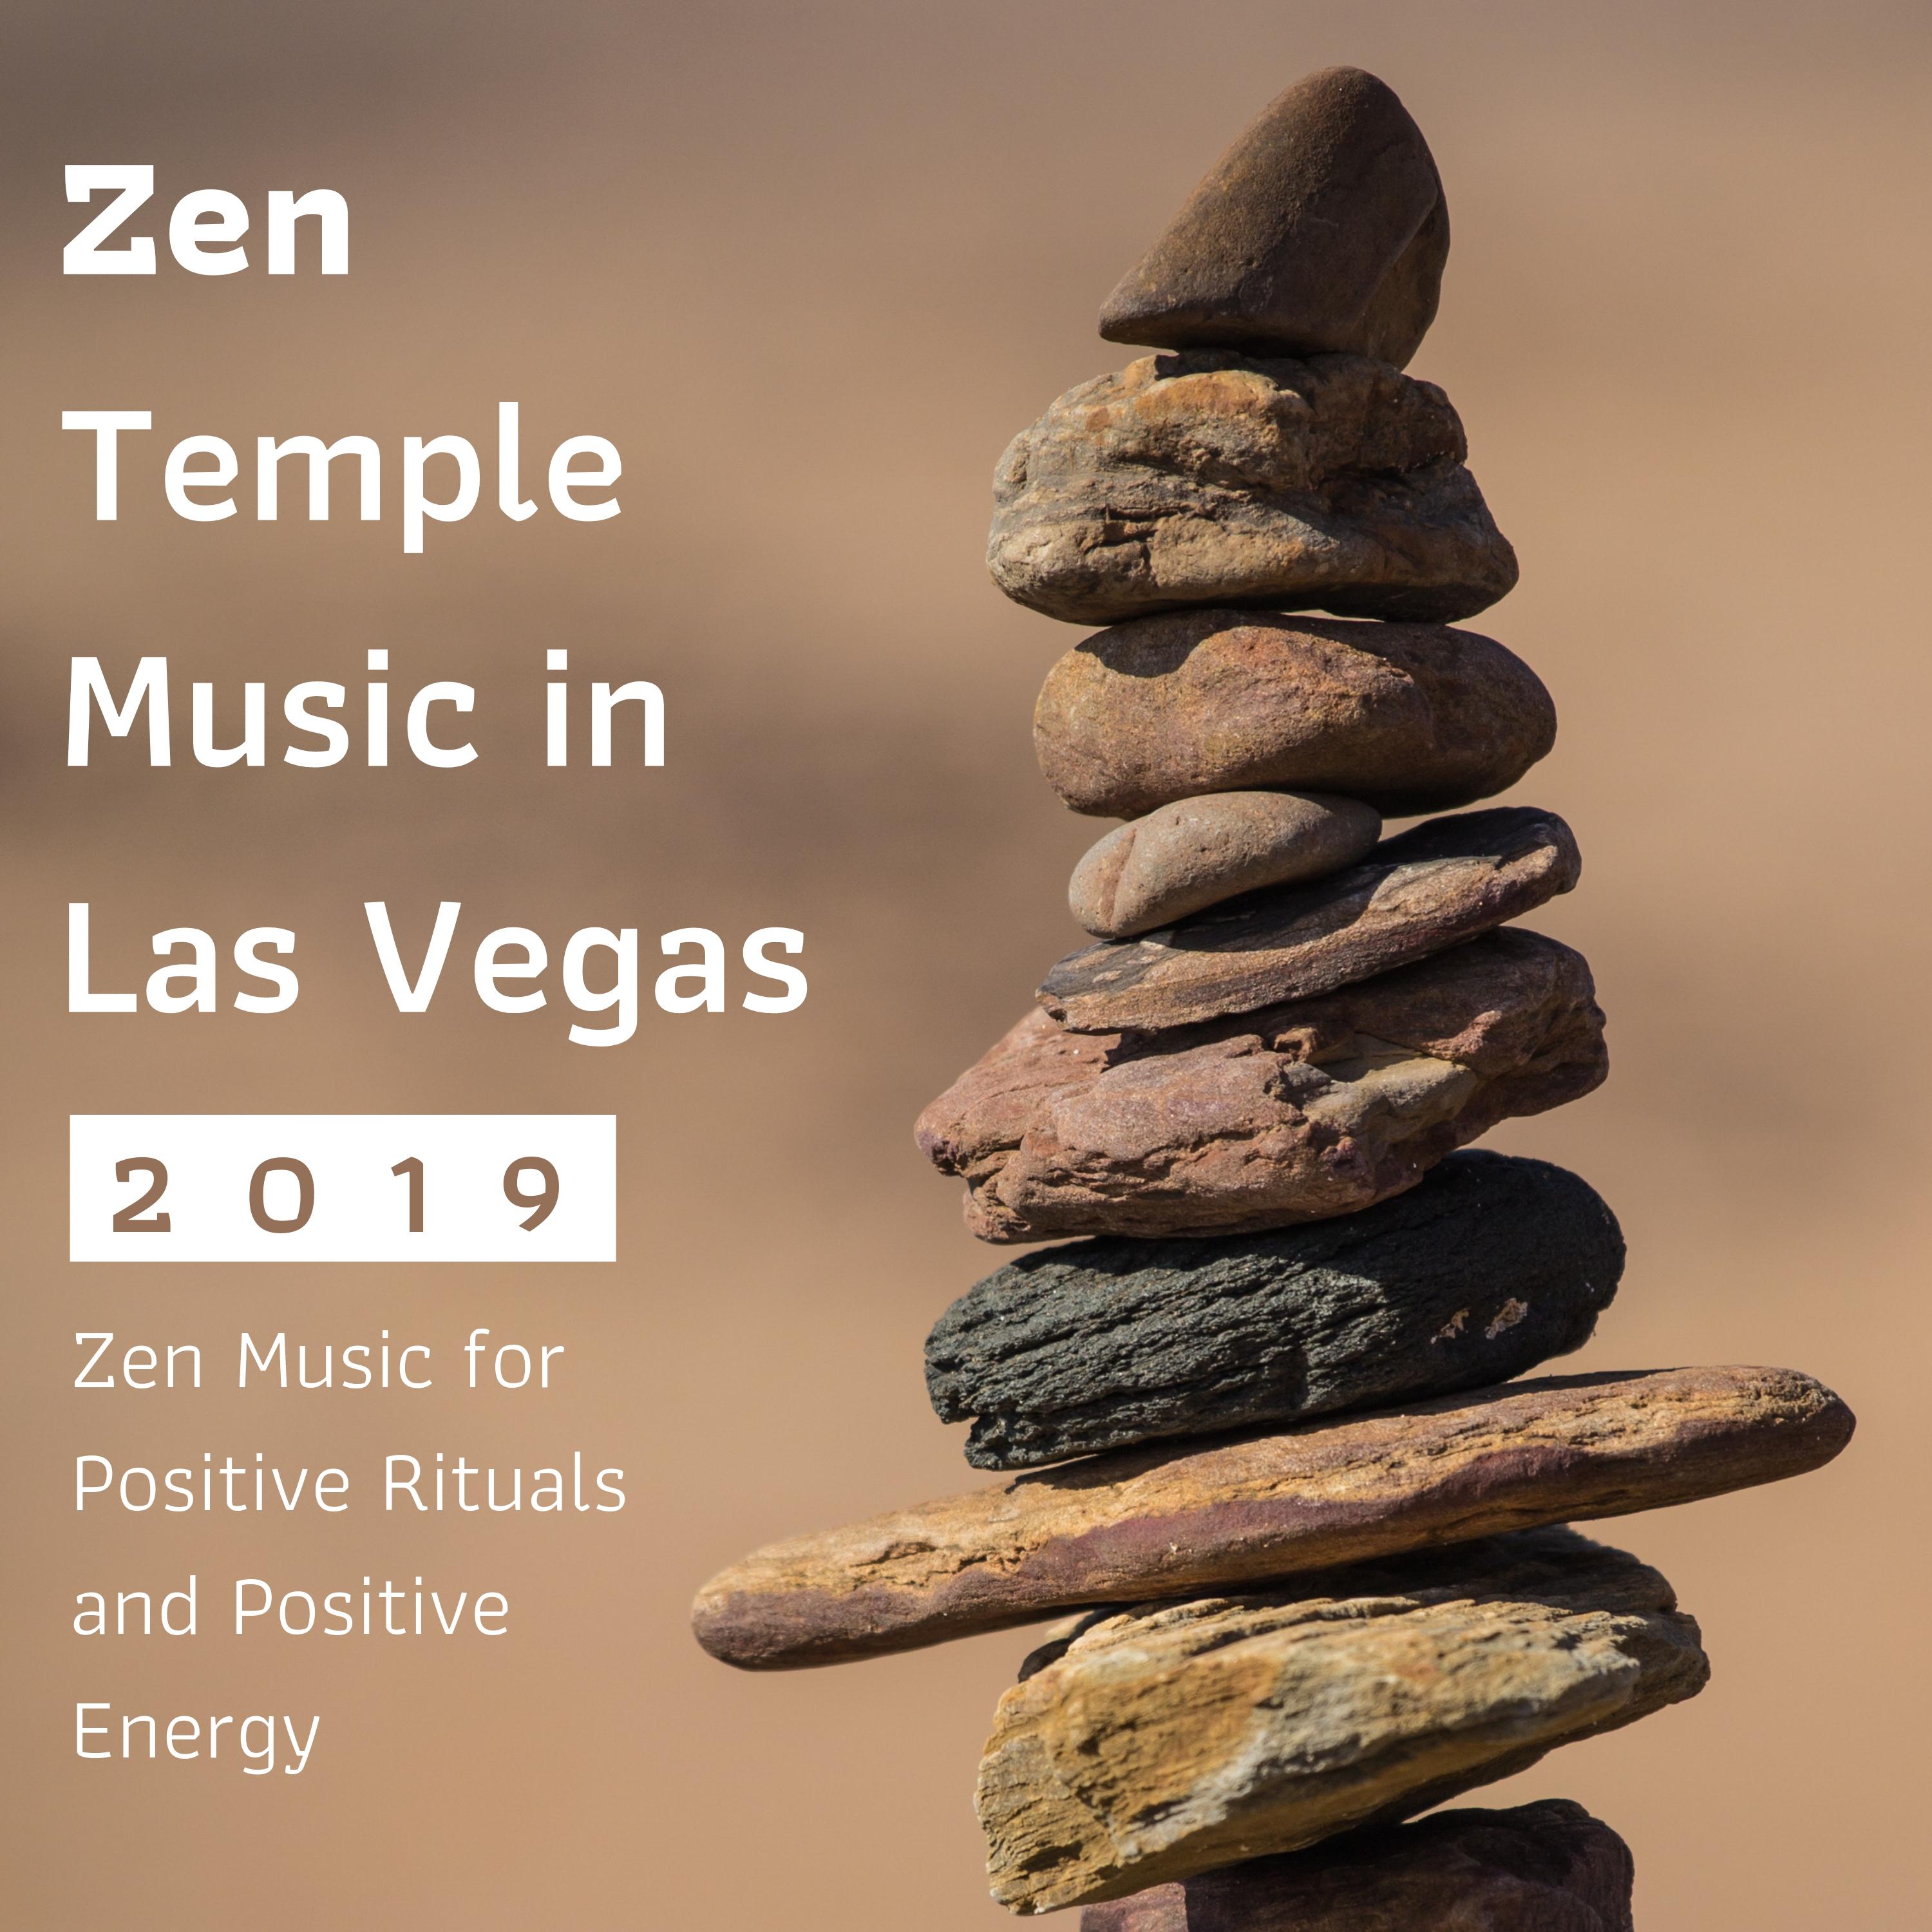 Zen Temple Music in Las Vegas